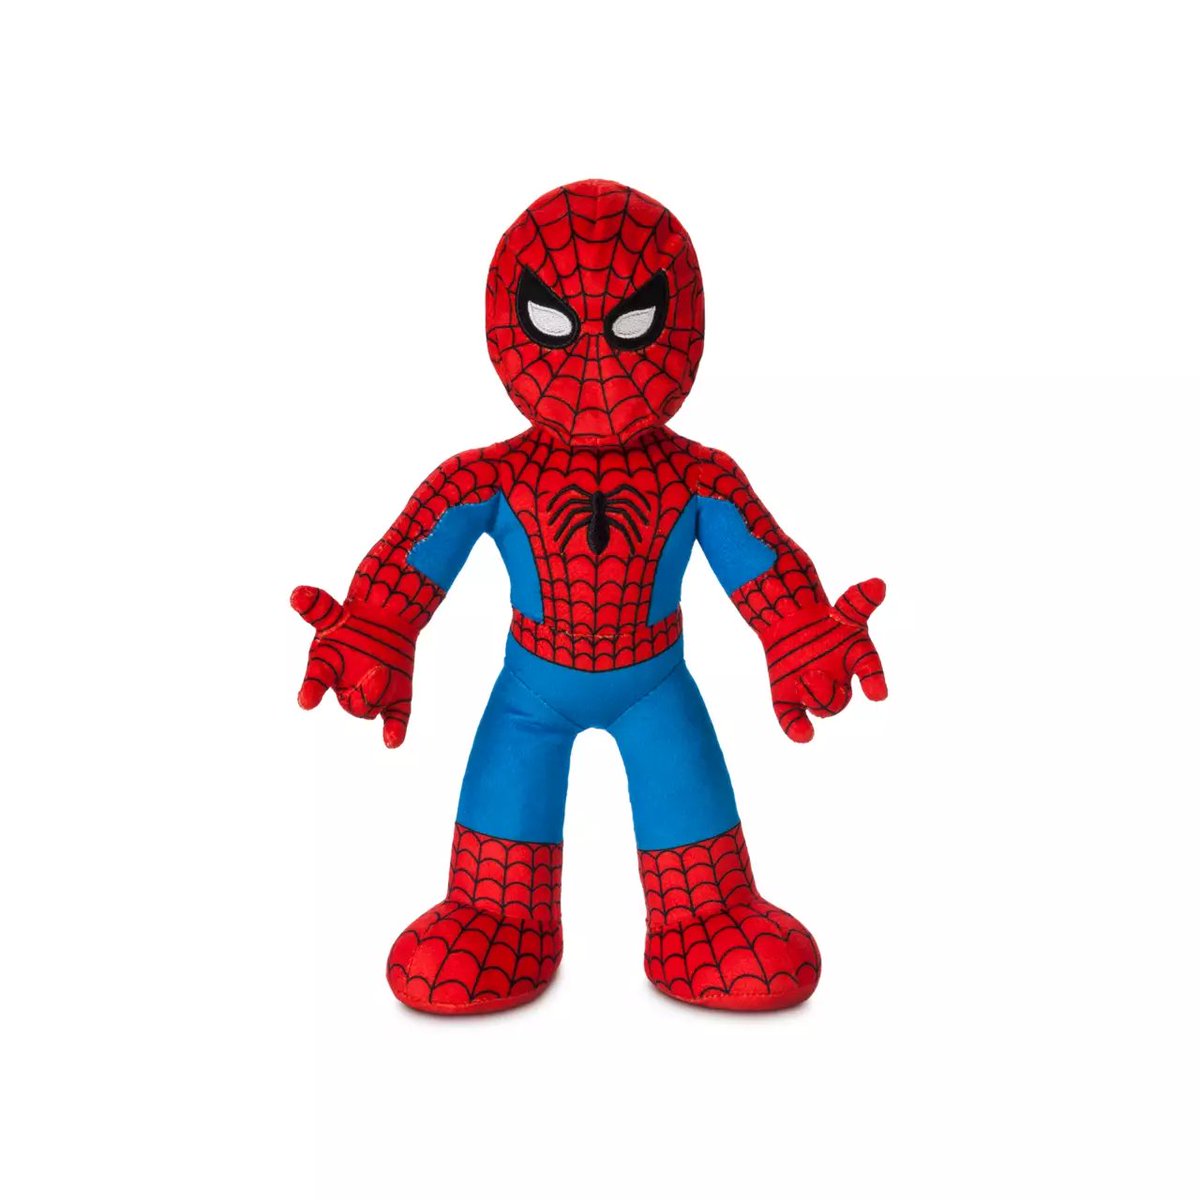 RT @aSpiderManFan1: Spider-Man 60th Anniversary Plush https://t.co/9QLpwCnQF8